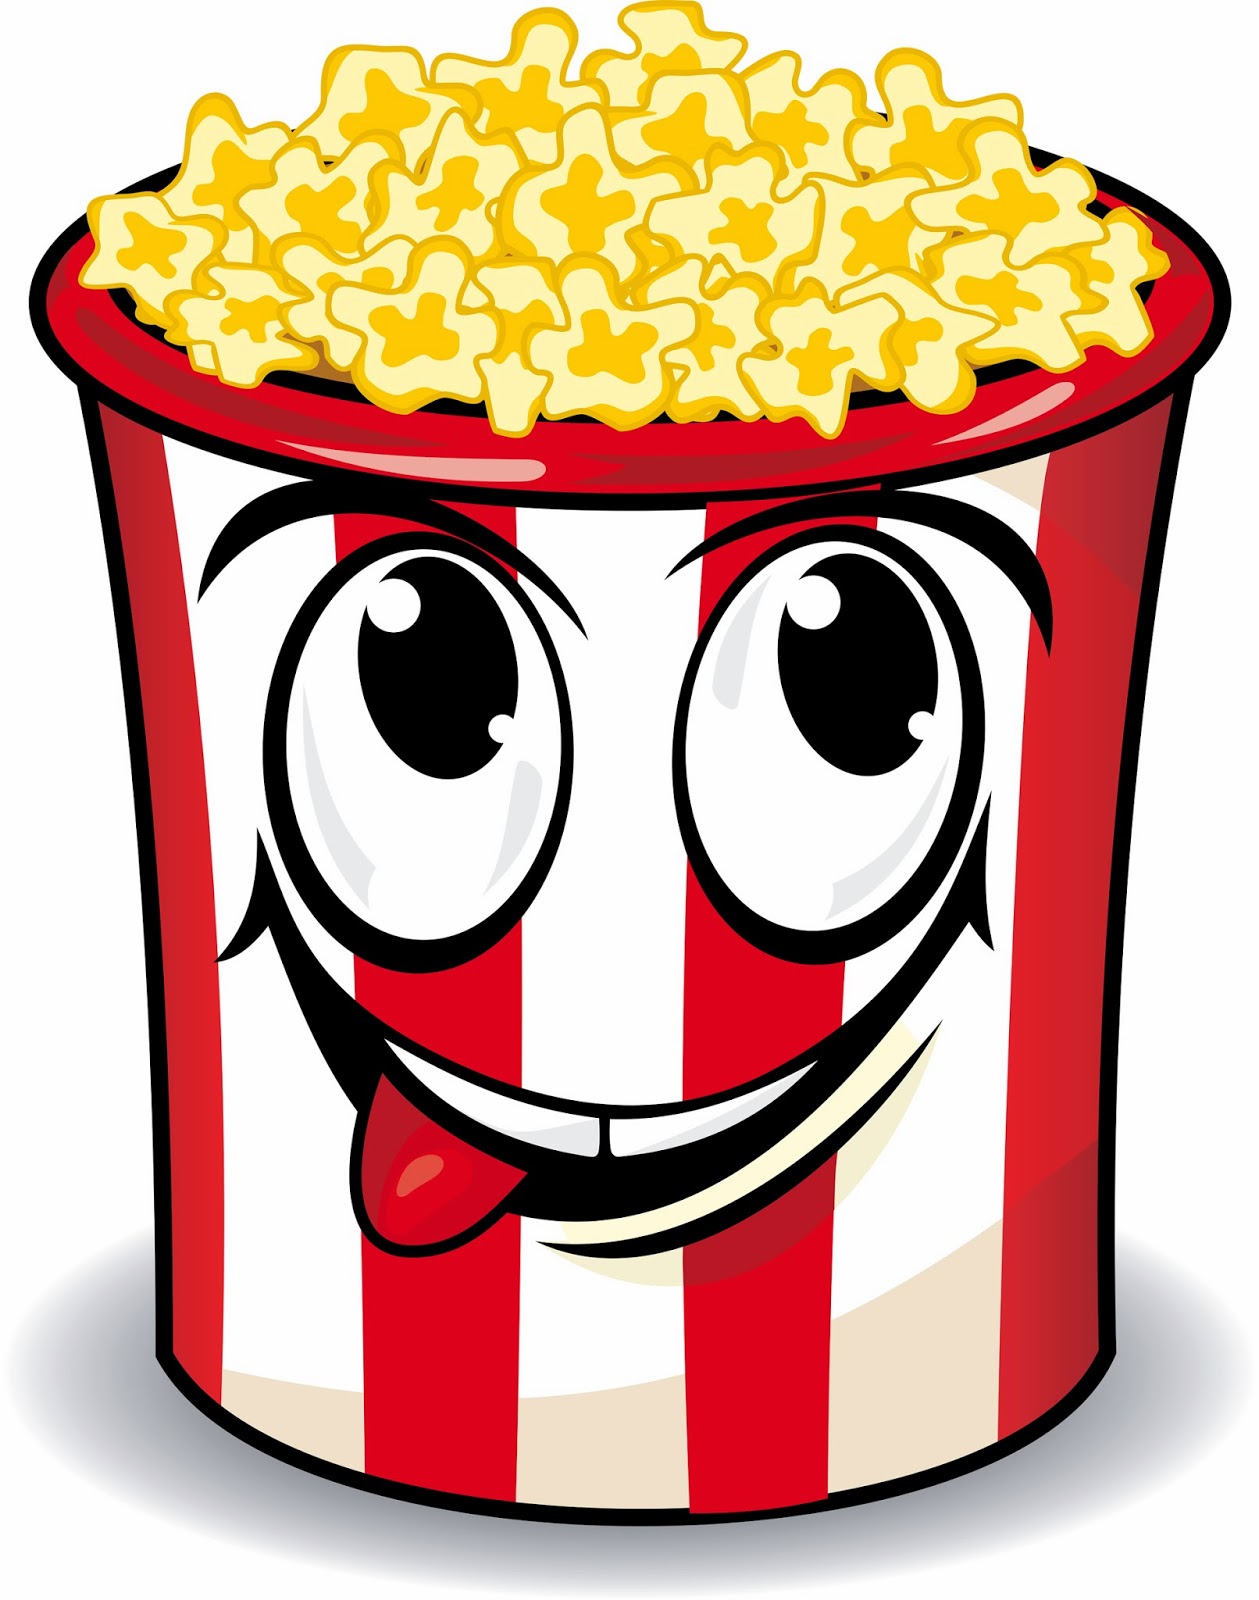 50 Free Popcorn Clipart